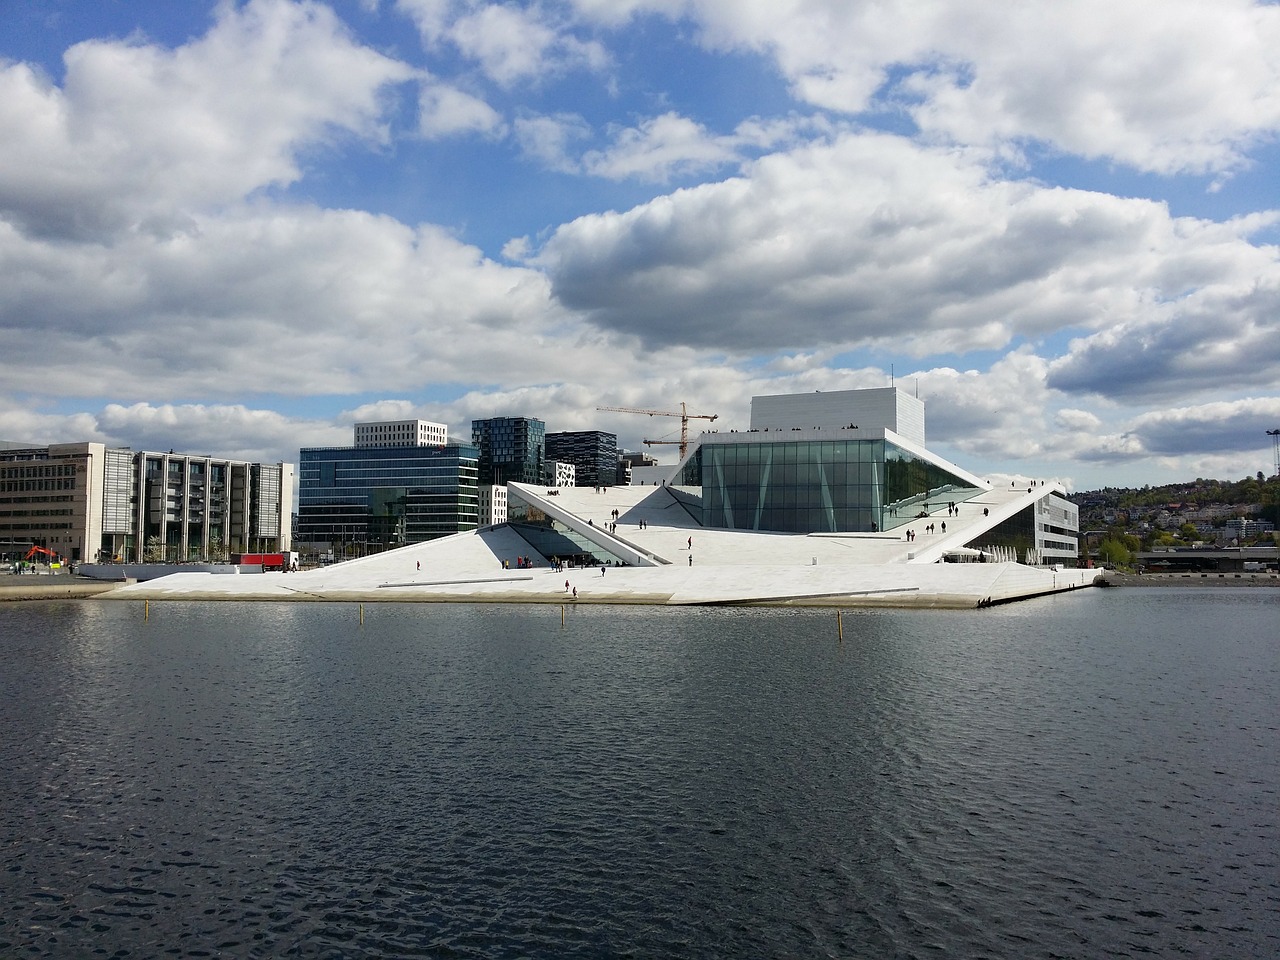 Oslo opera house and port